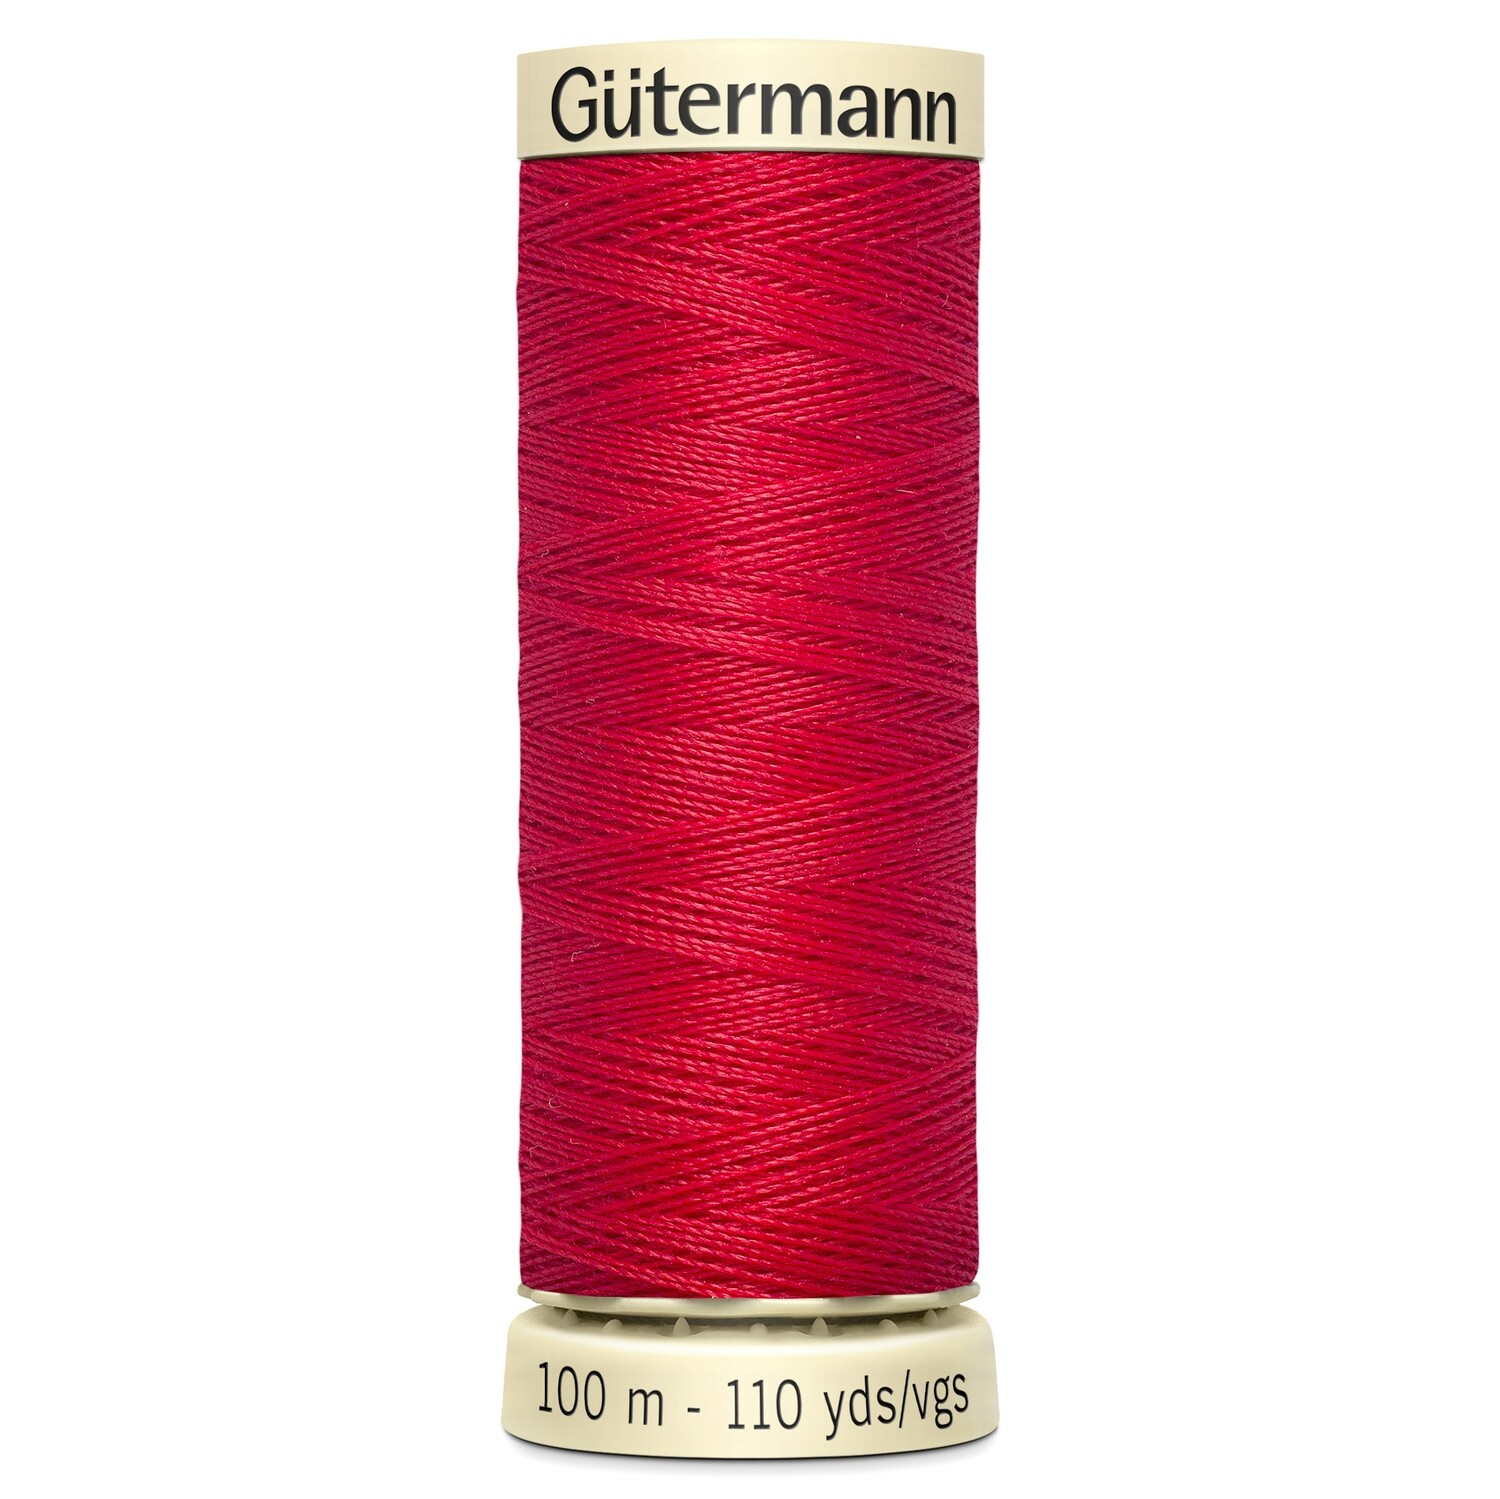 Gutermann Sew-All thread 156